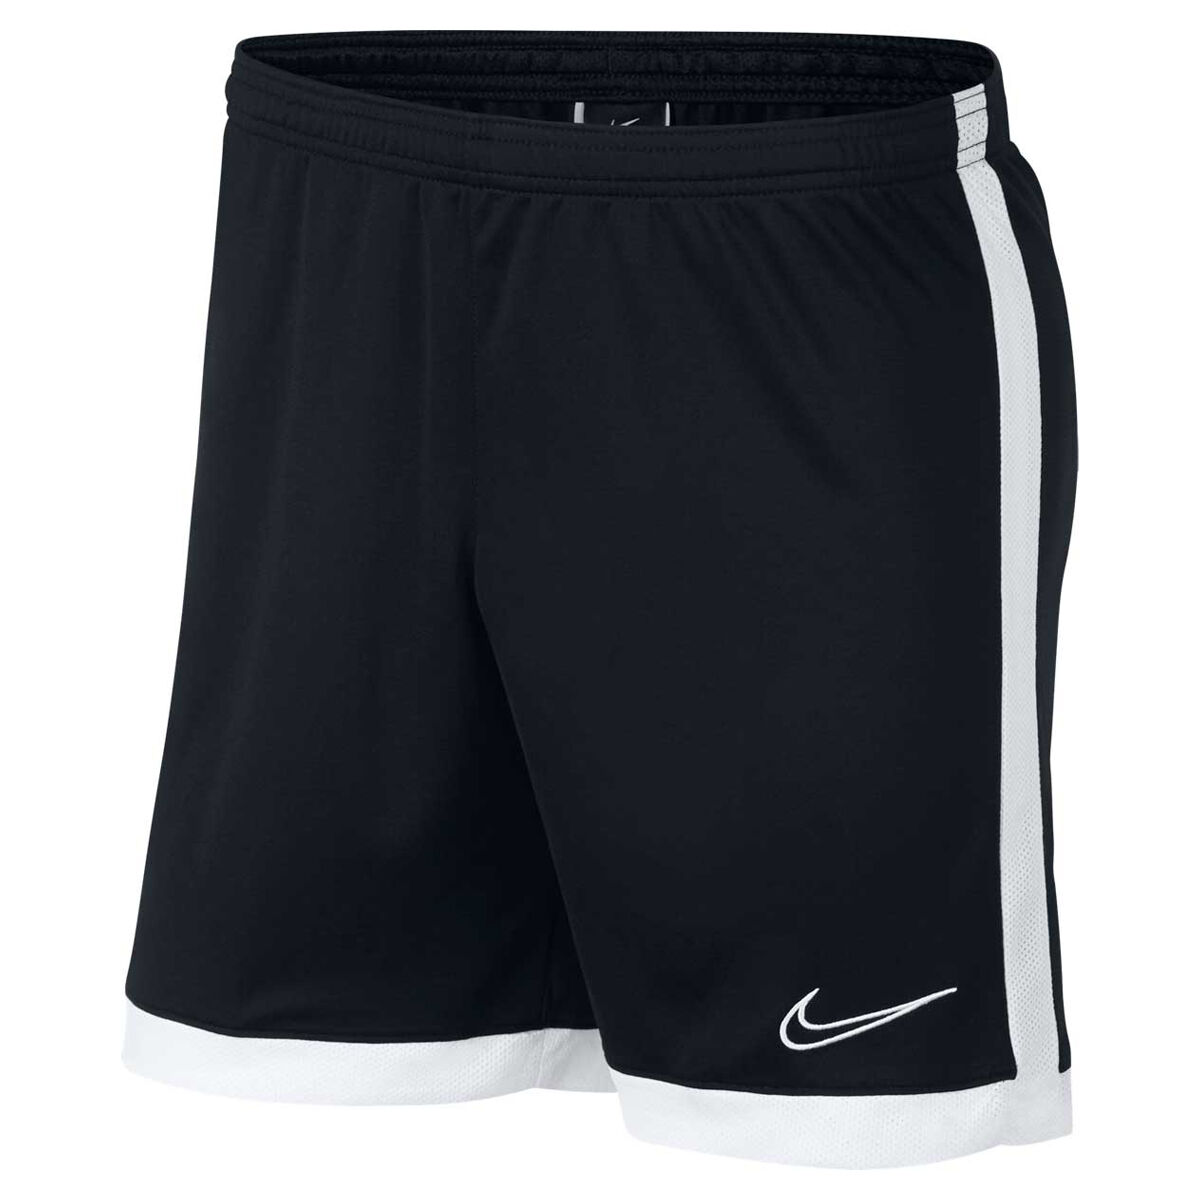 nike football shorts size guide